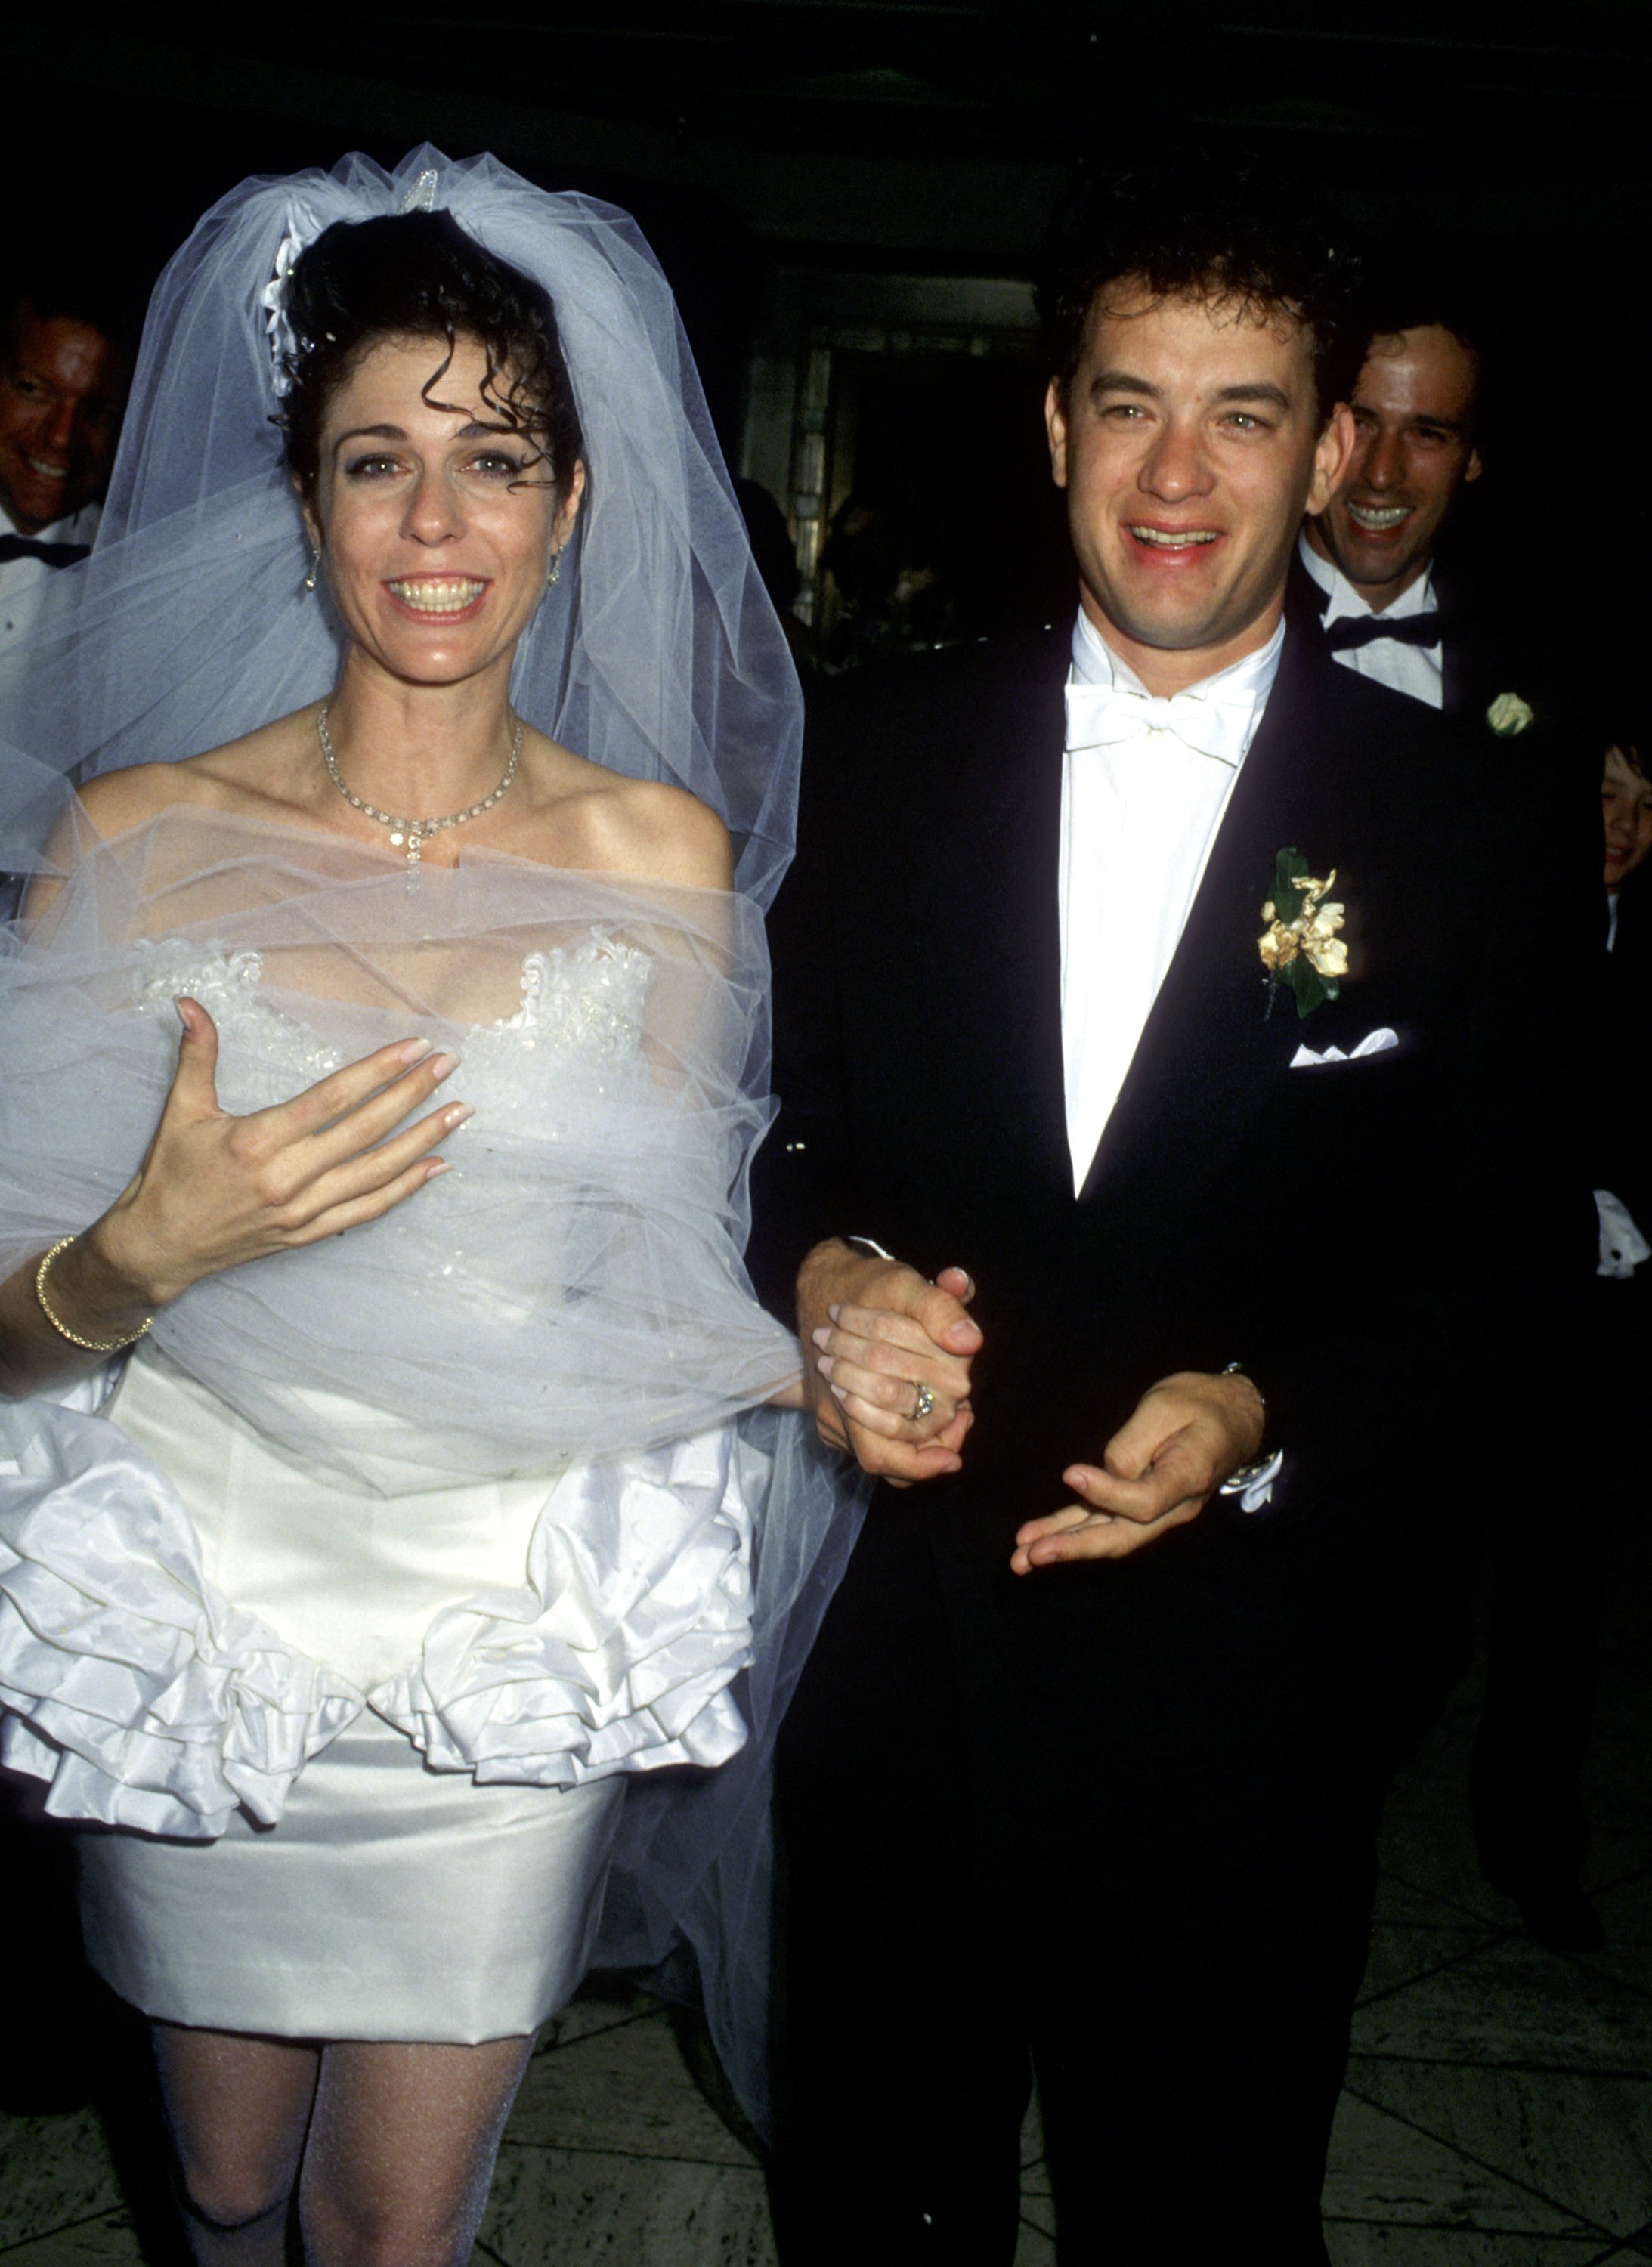 Tom Hanks and Rita Wilson's wedding